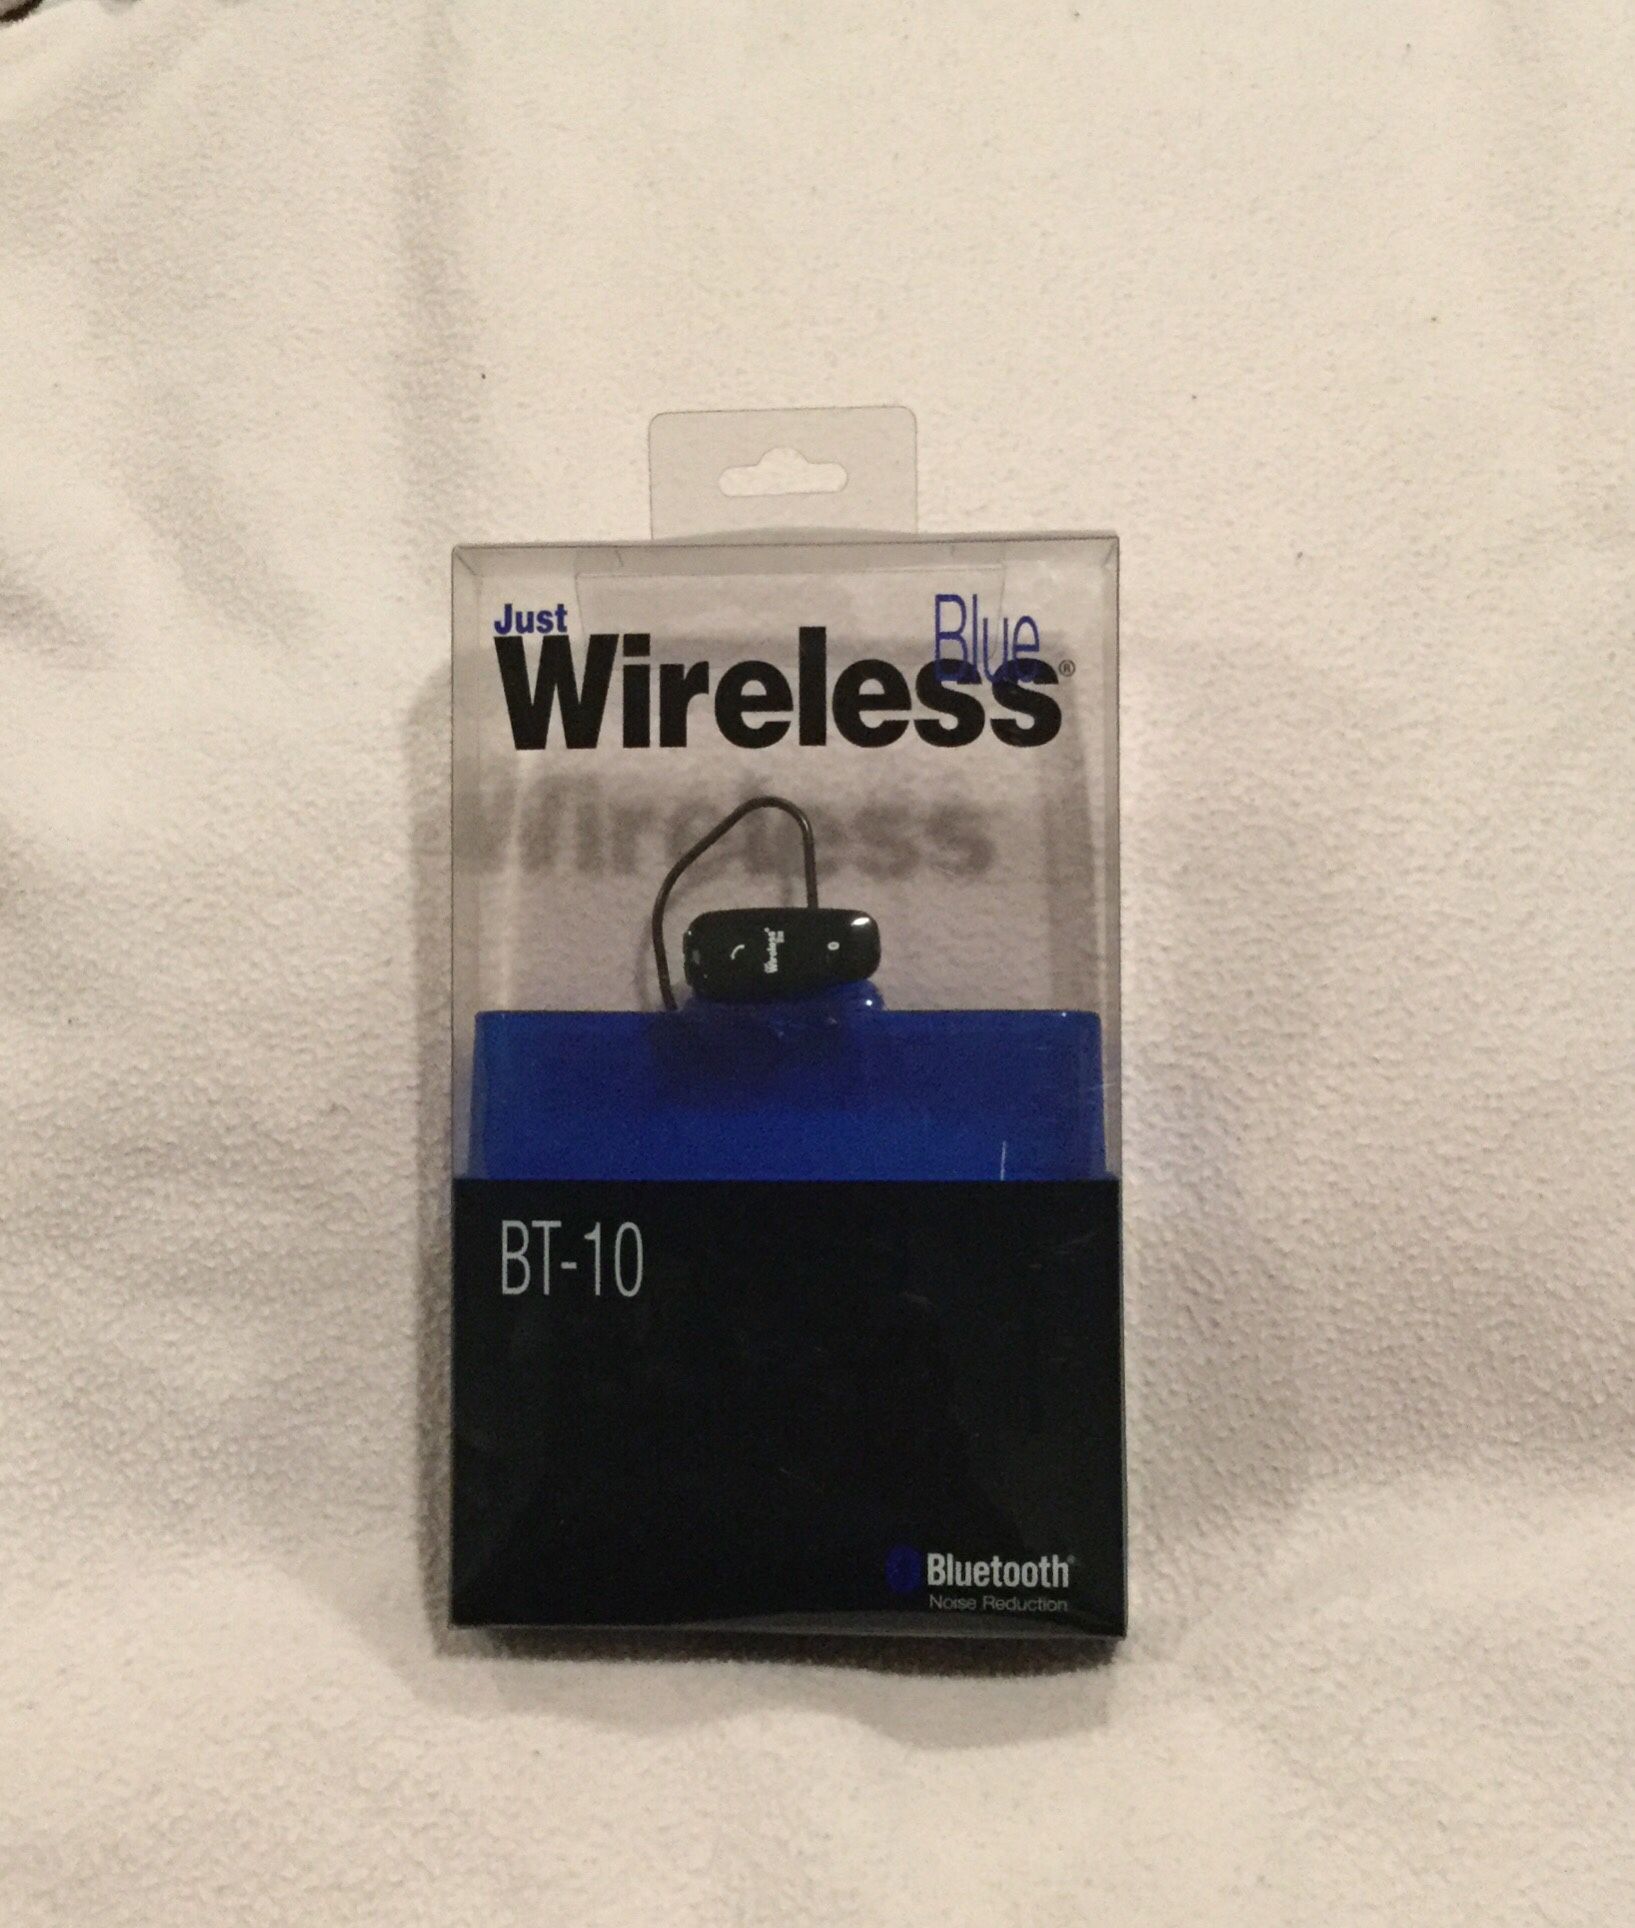 Just Wireless Blue BT-10